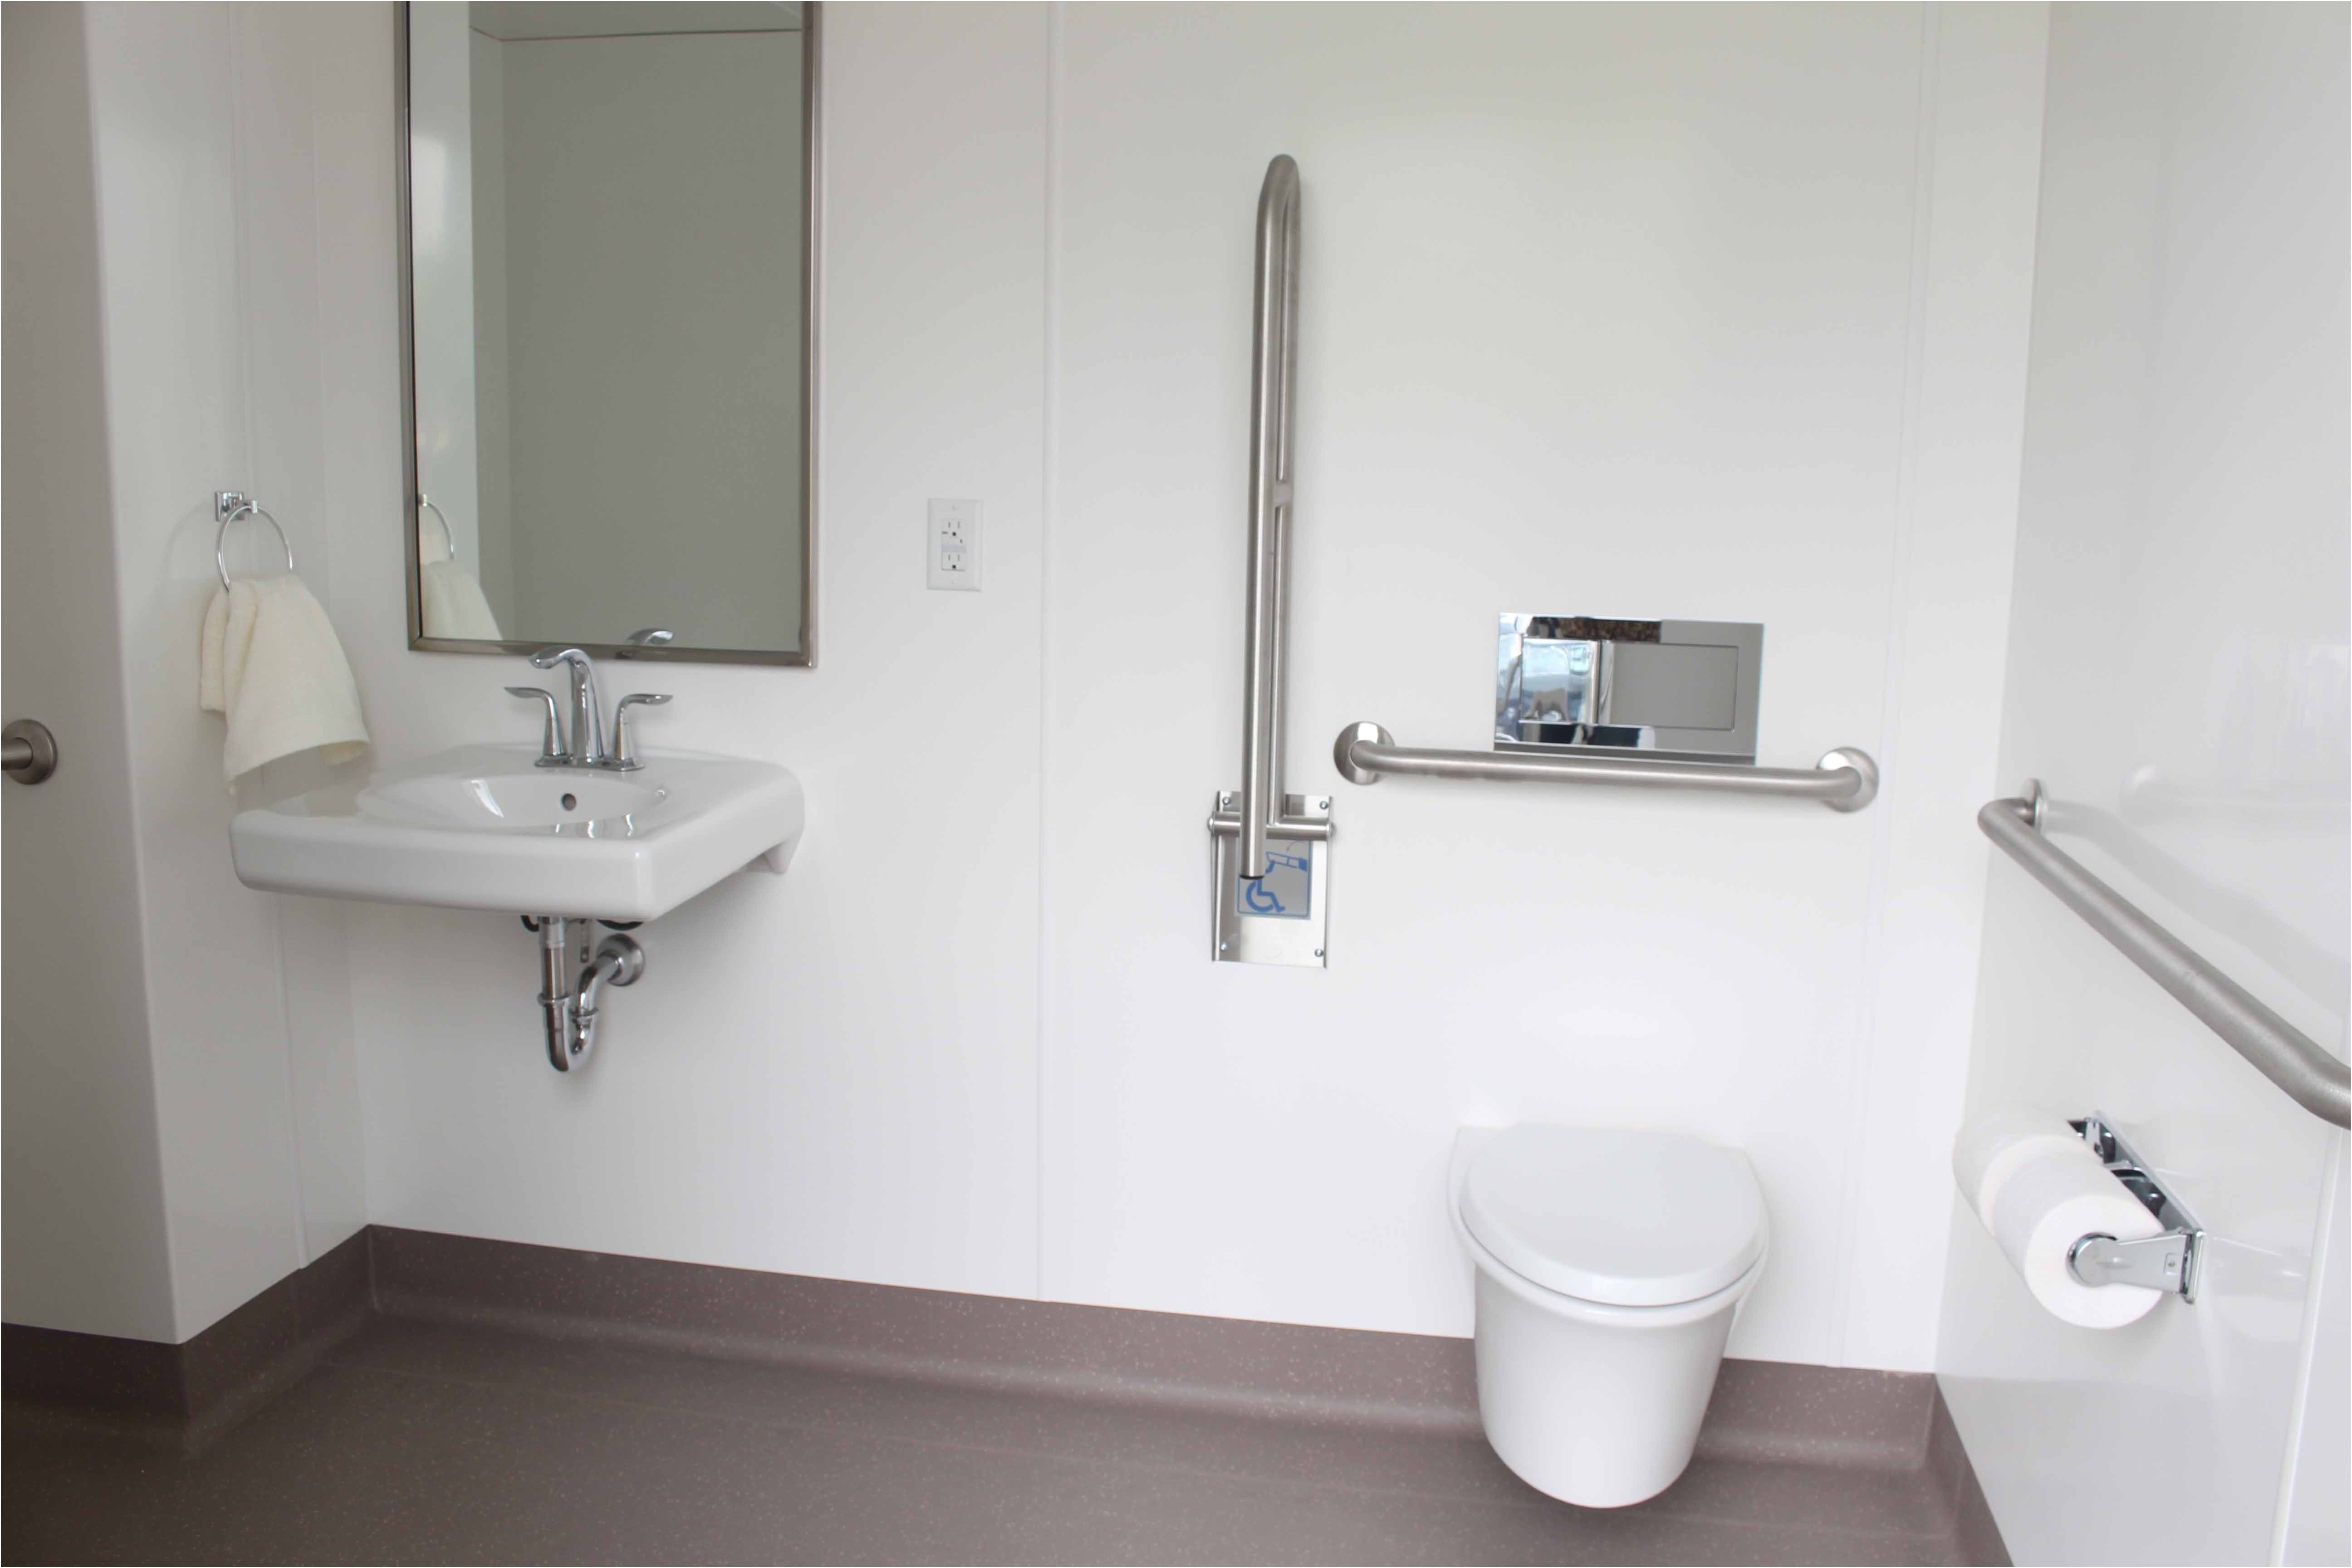 hospital bathroom design gurdjieffouspensky from Hospital Bathroom Design